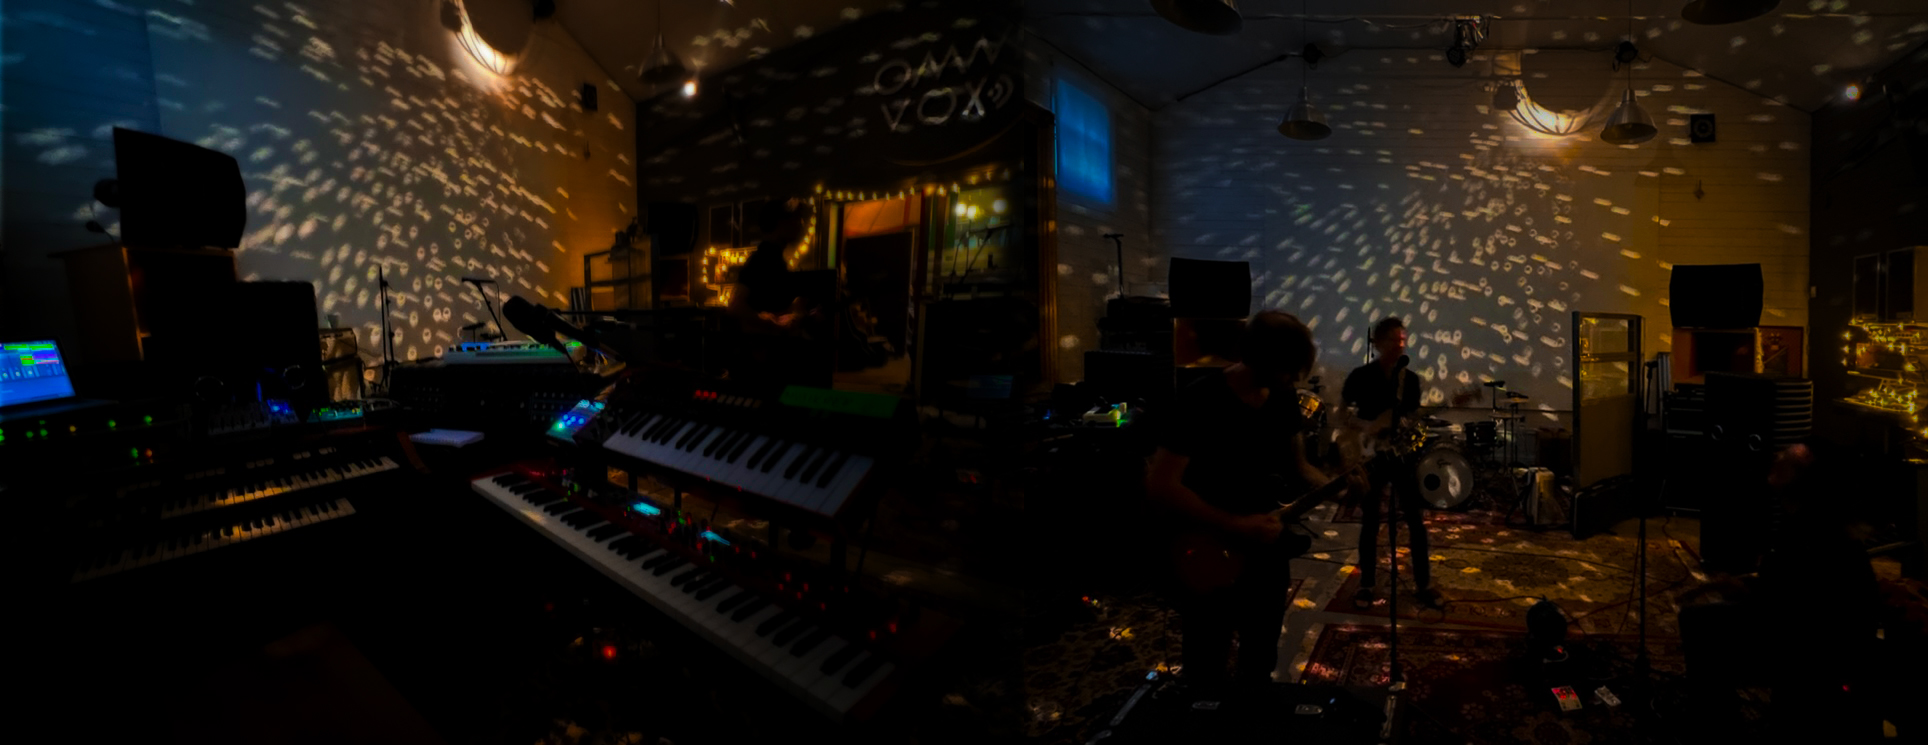 The Big Recordingroom at Omnivox Studio